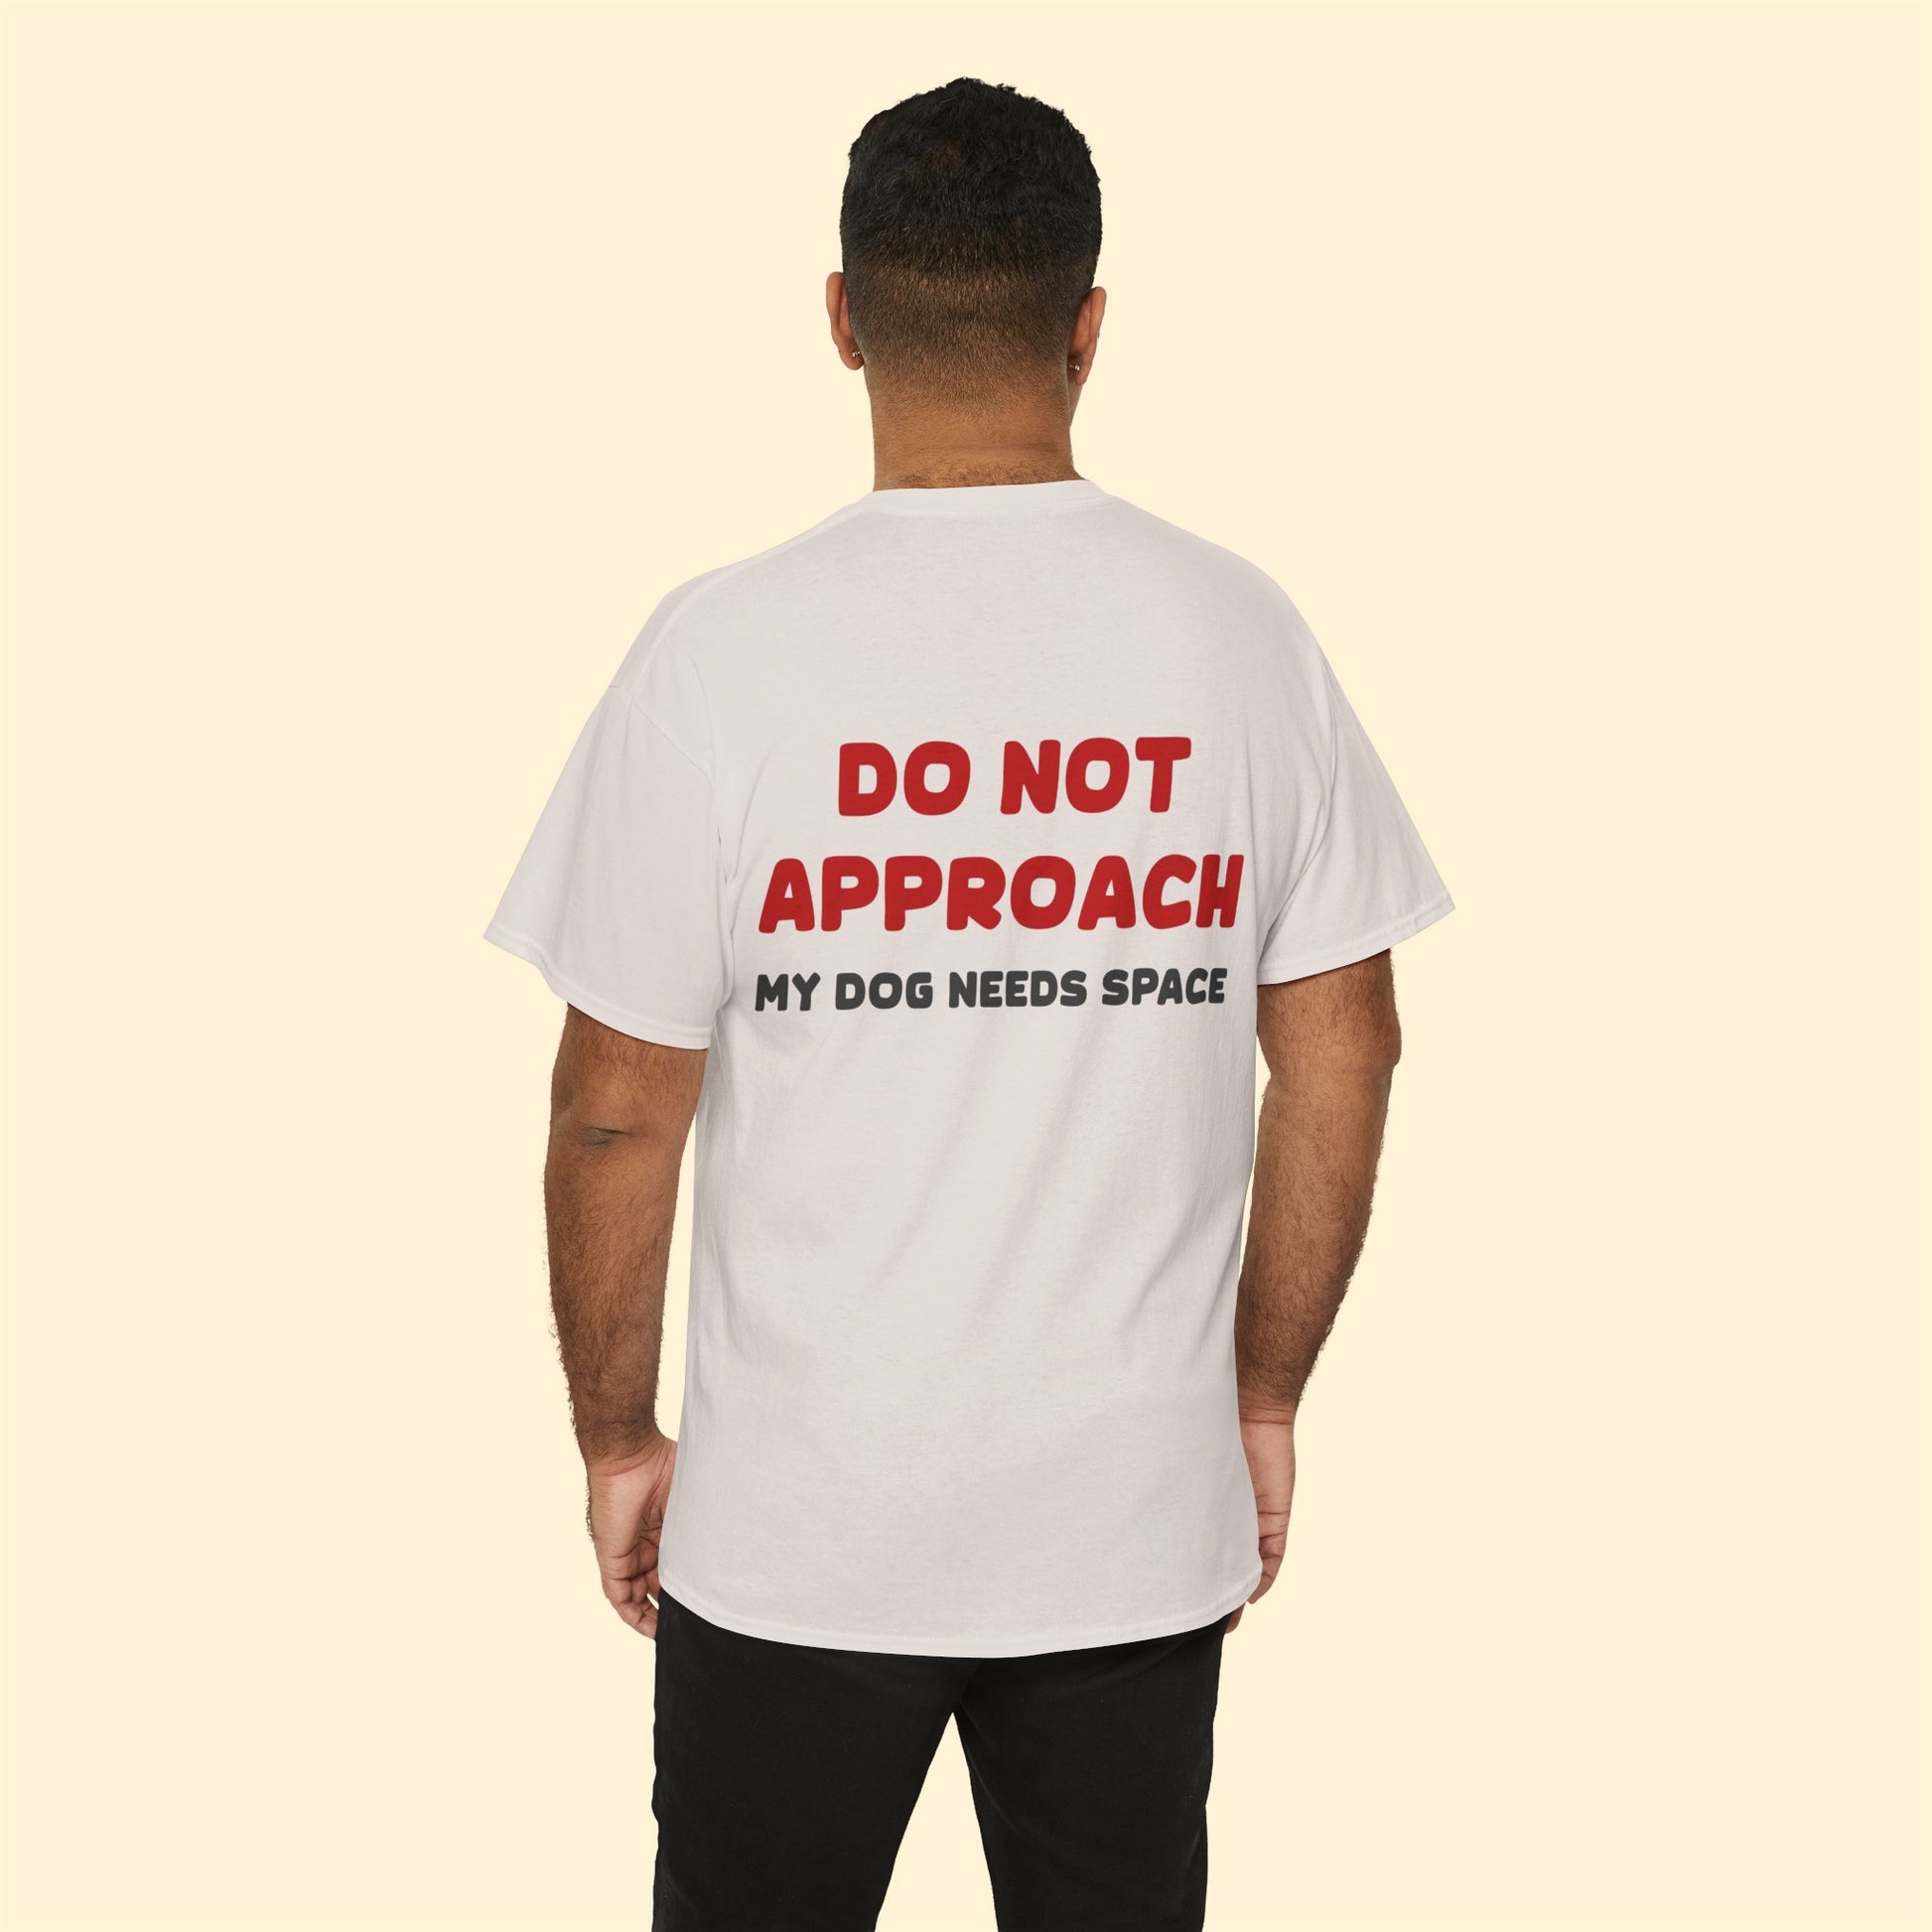 My Dog Is Reactive | 2-Sided Print | T-shirt - Detezi Designs-24191227428399030328